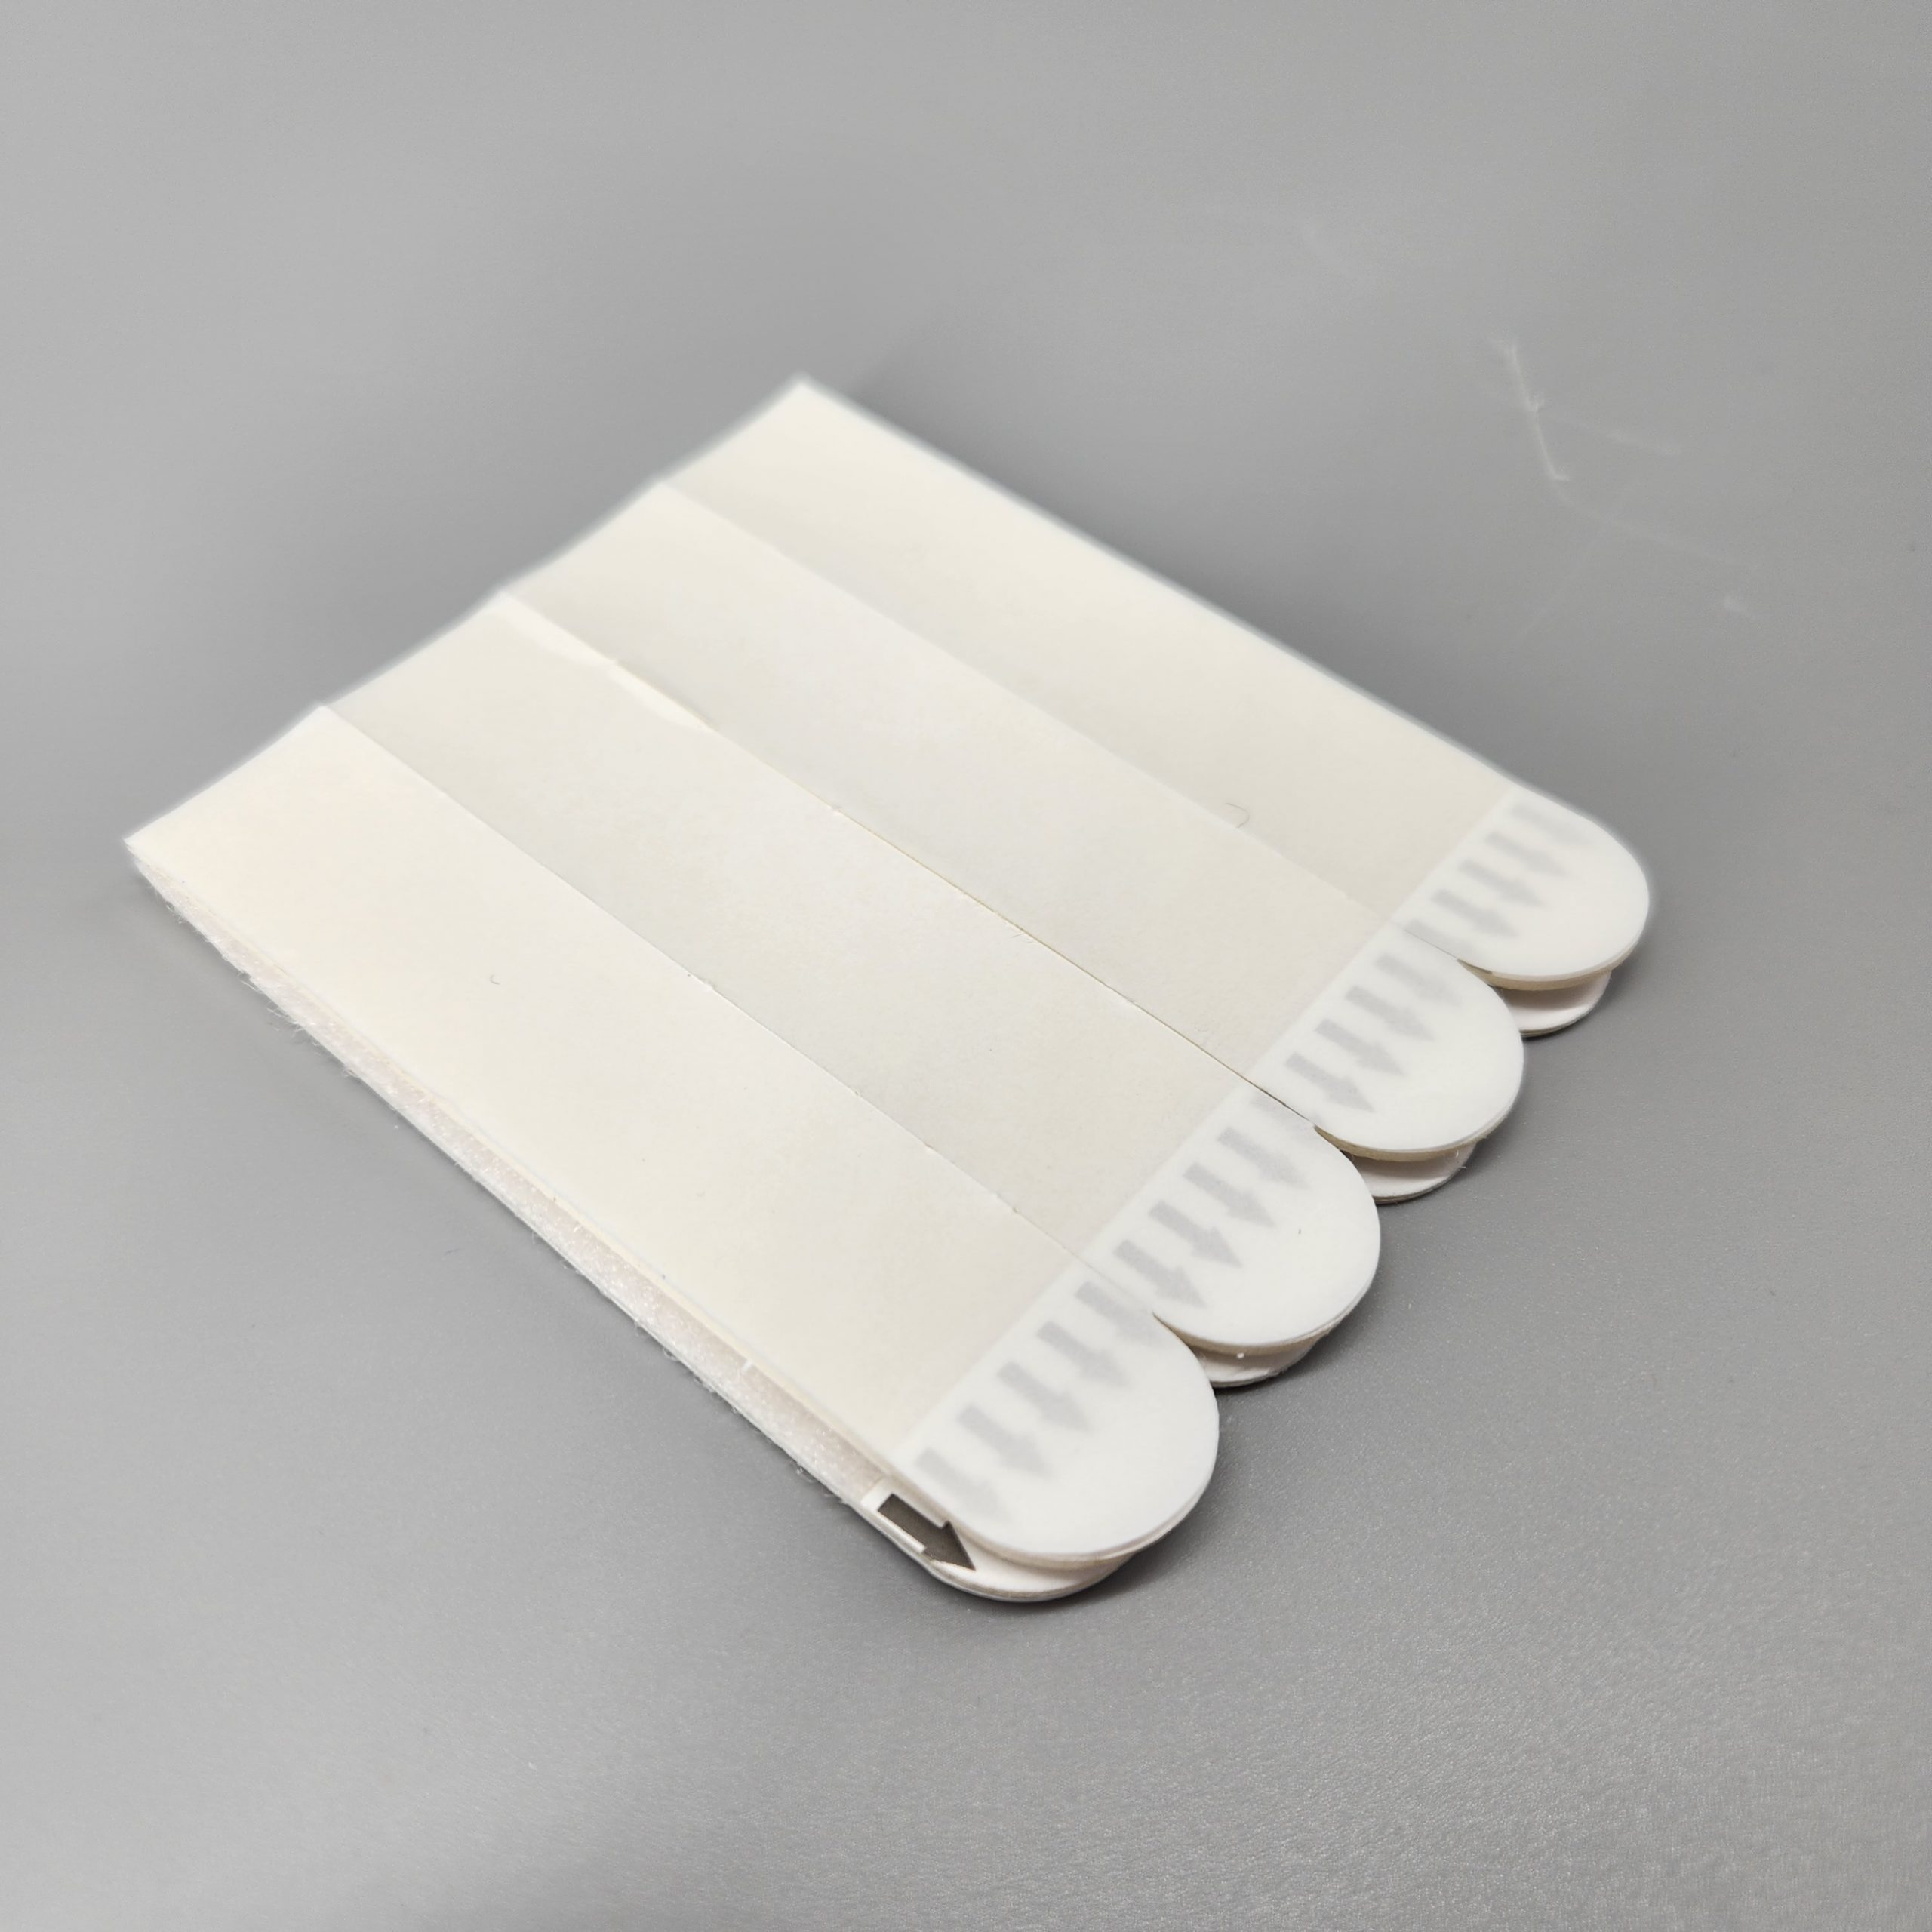 Velcro Hanging Strips - Set of 4 Pairs